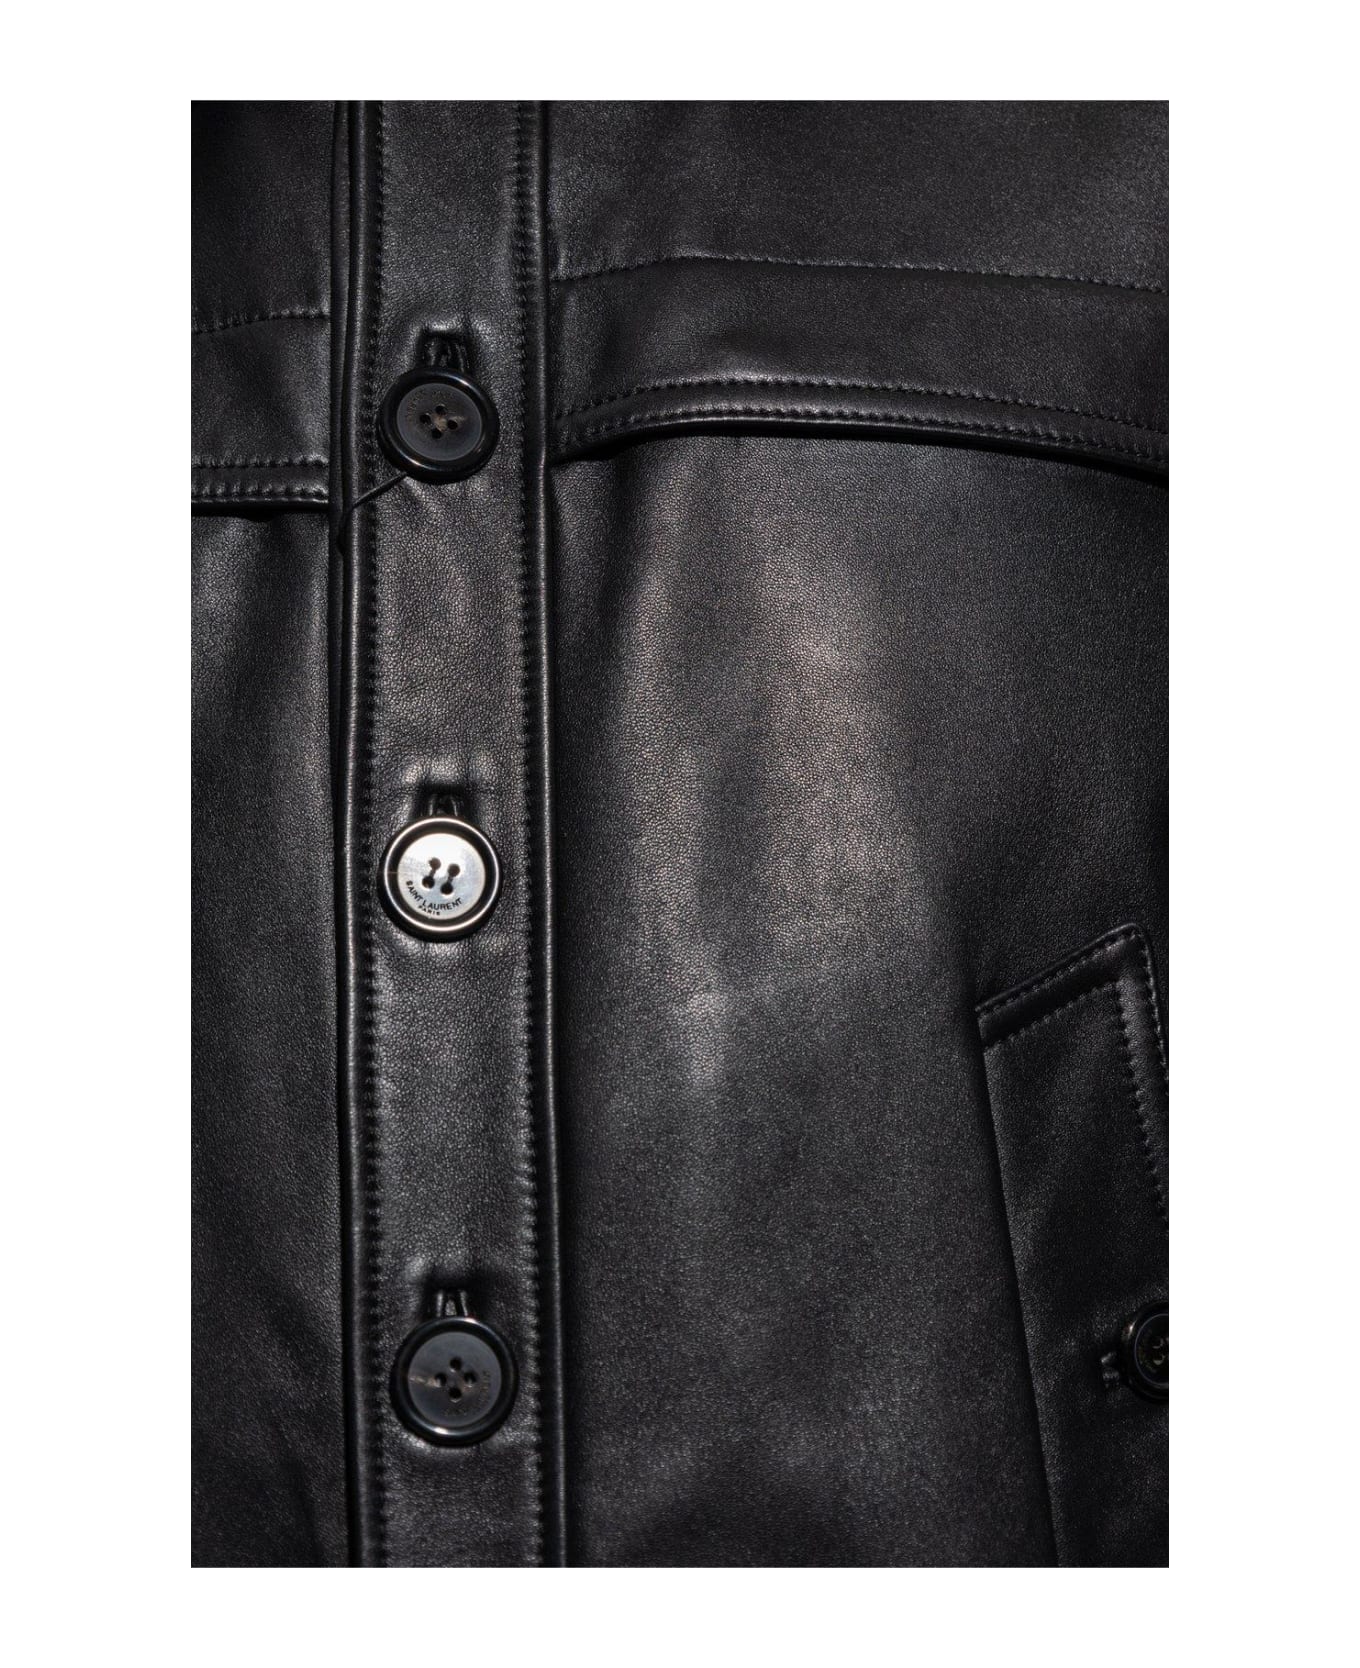 Saint Laurent Button Up Leather Jacket - BLACK レザージャケット